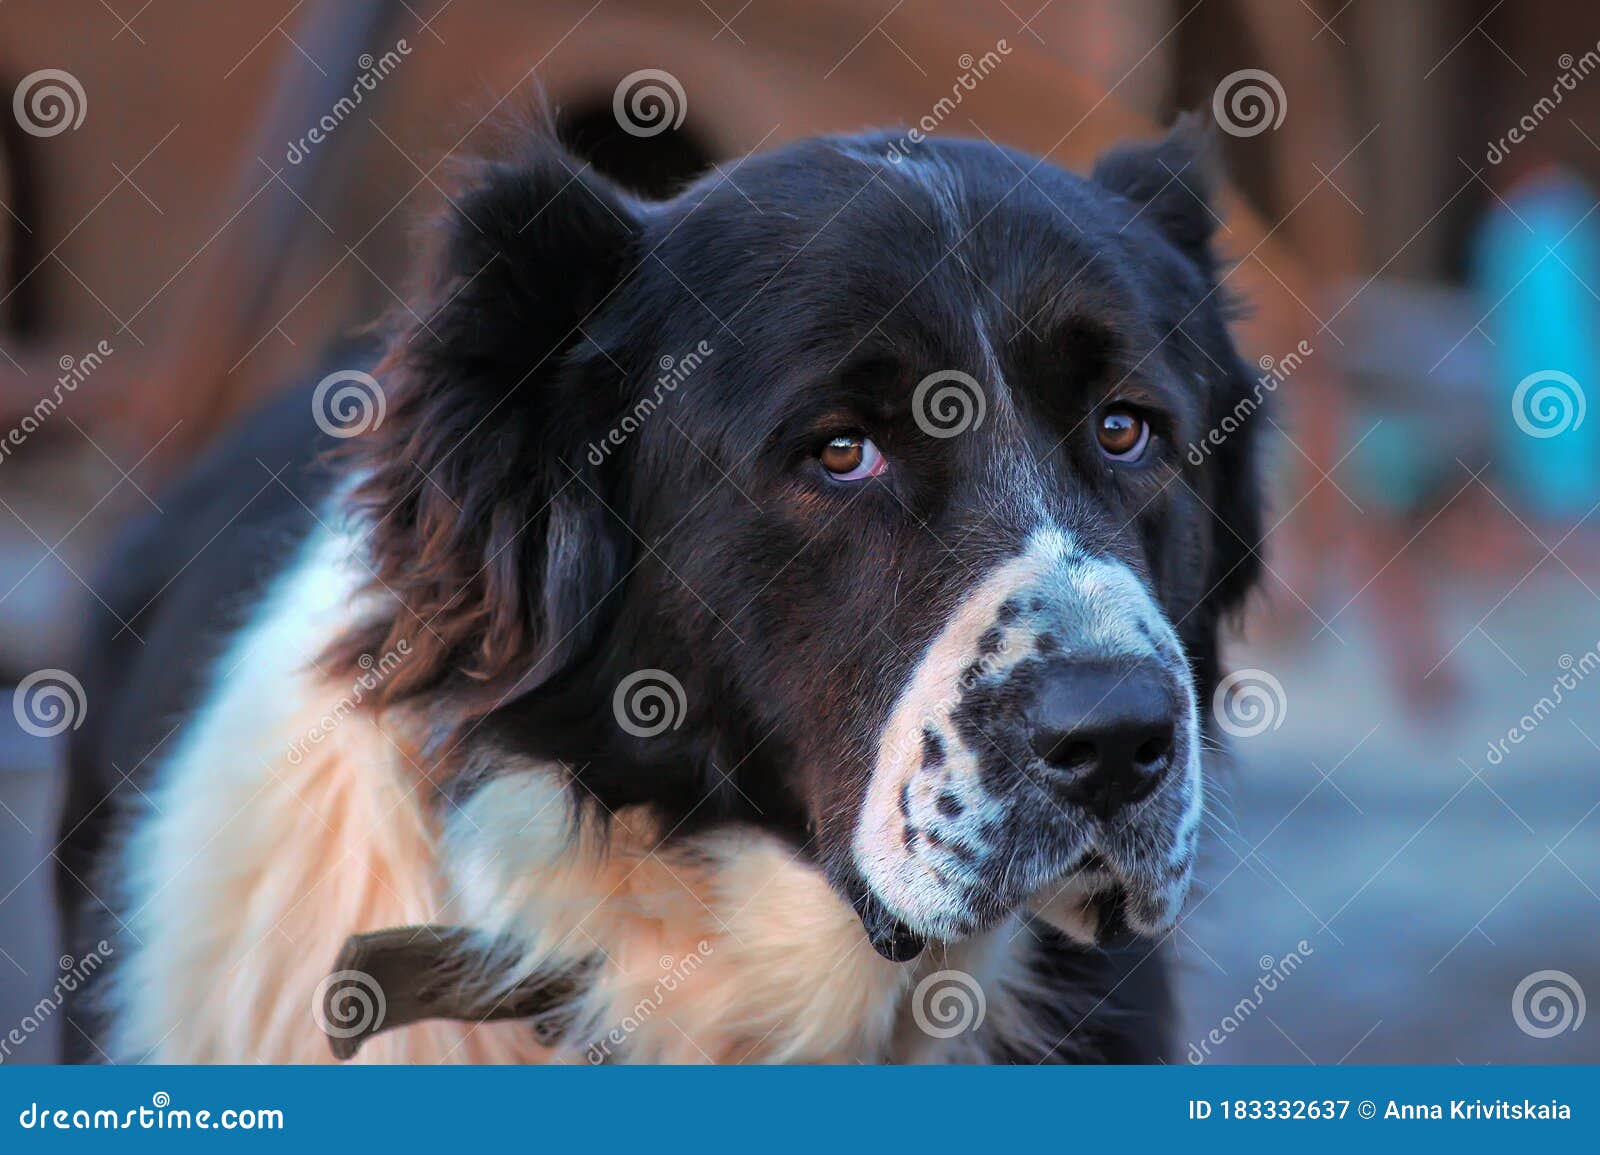 Black And White Dog Caucasian Shepherd Stock Image Image Of Brown Fierce 183332637